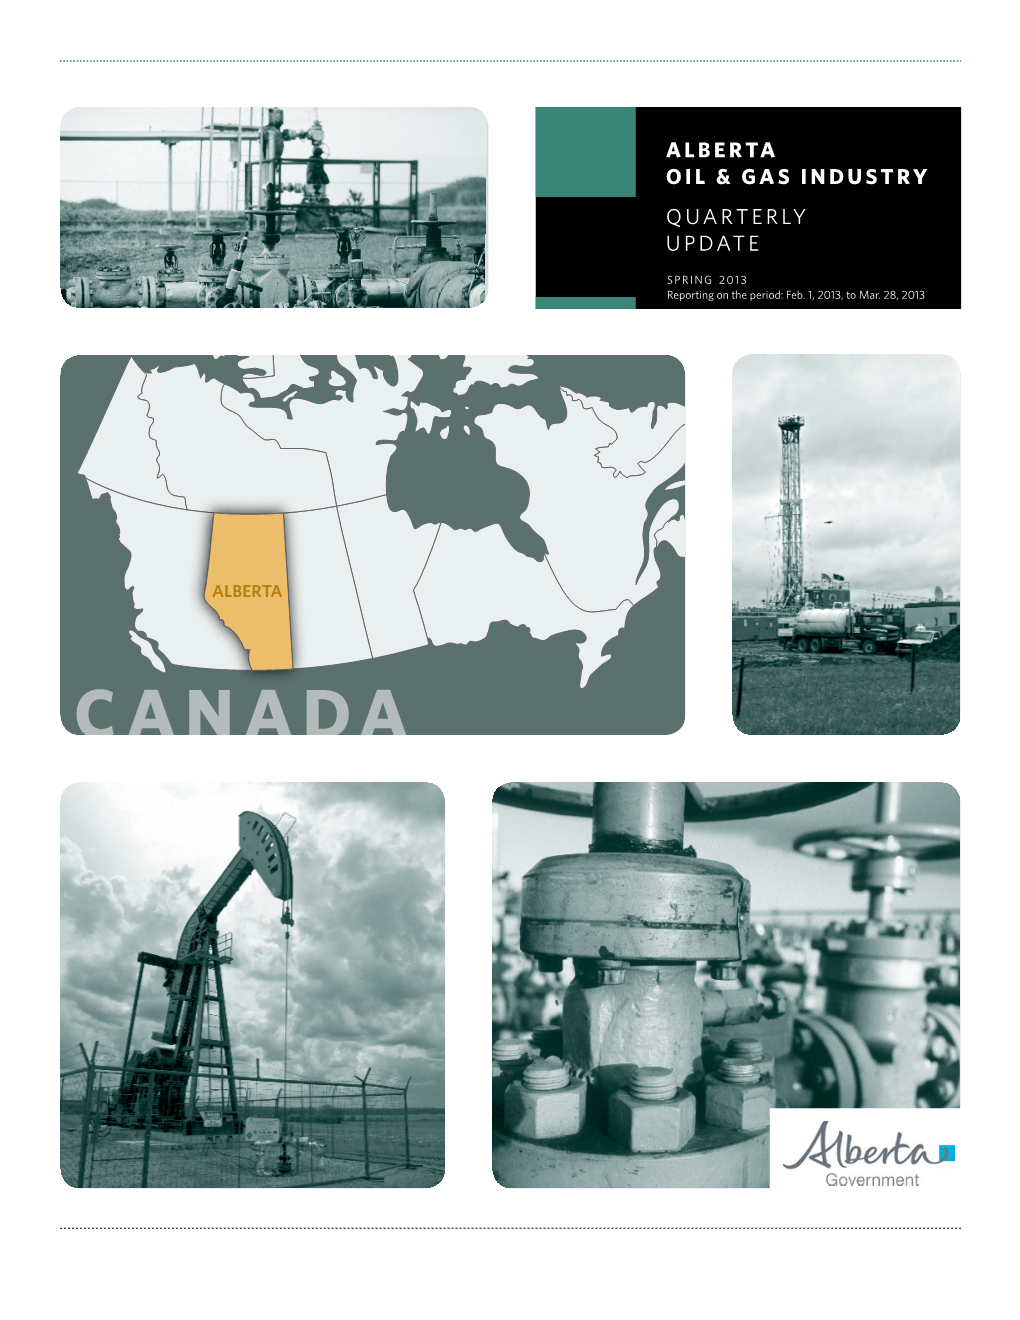 Canada 2 Alberta Oil & Gas Industry Quarterly Update